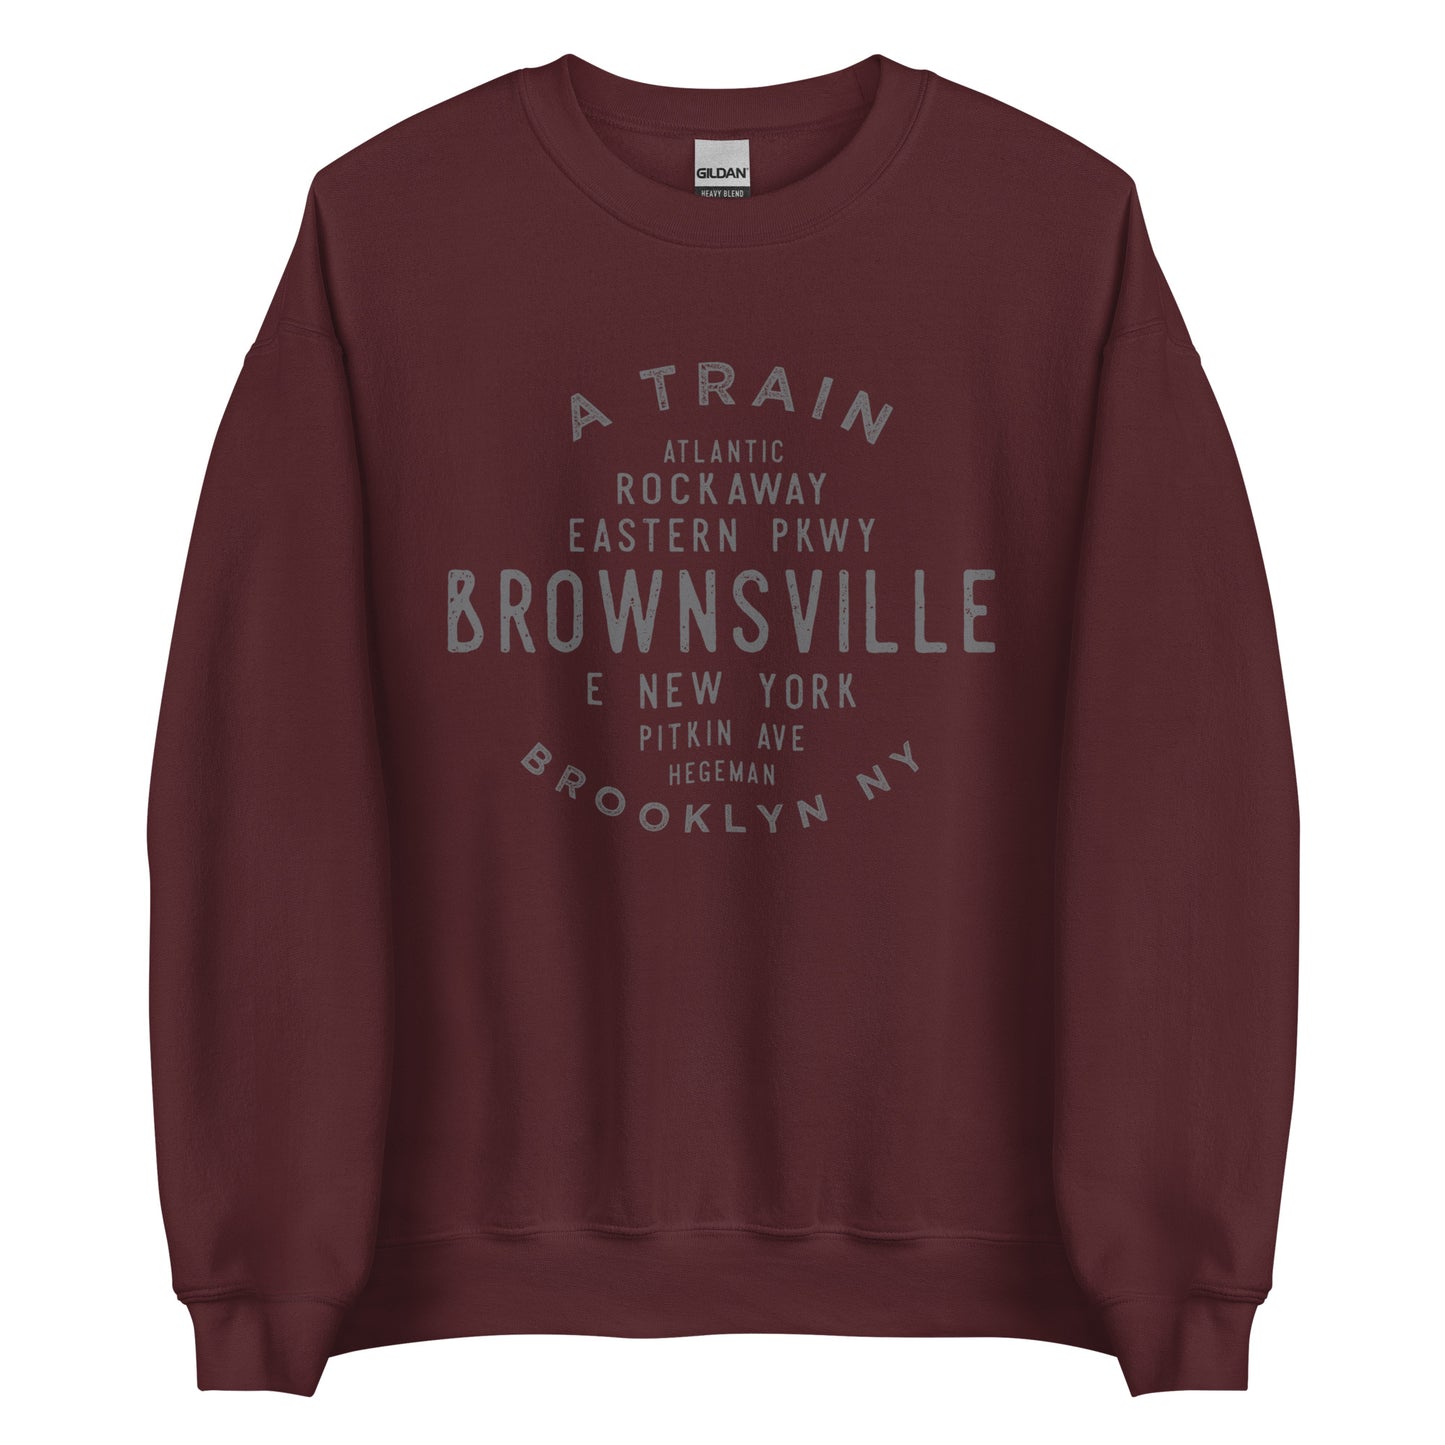 Brownsville Brooklyn NYC Adult Sweatshirt